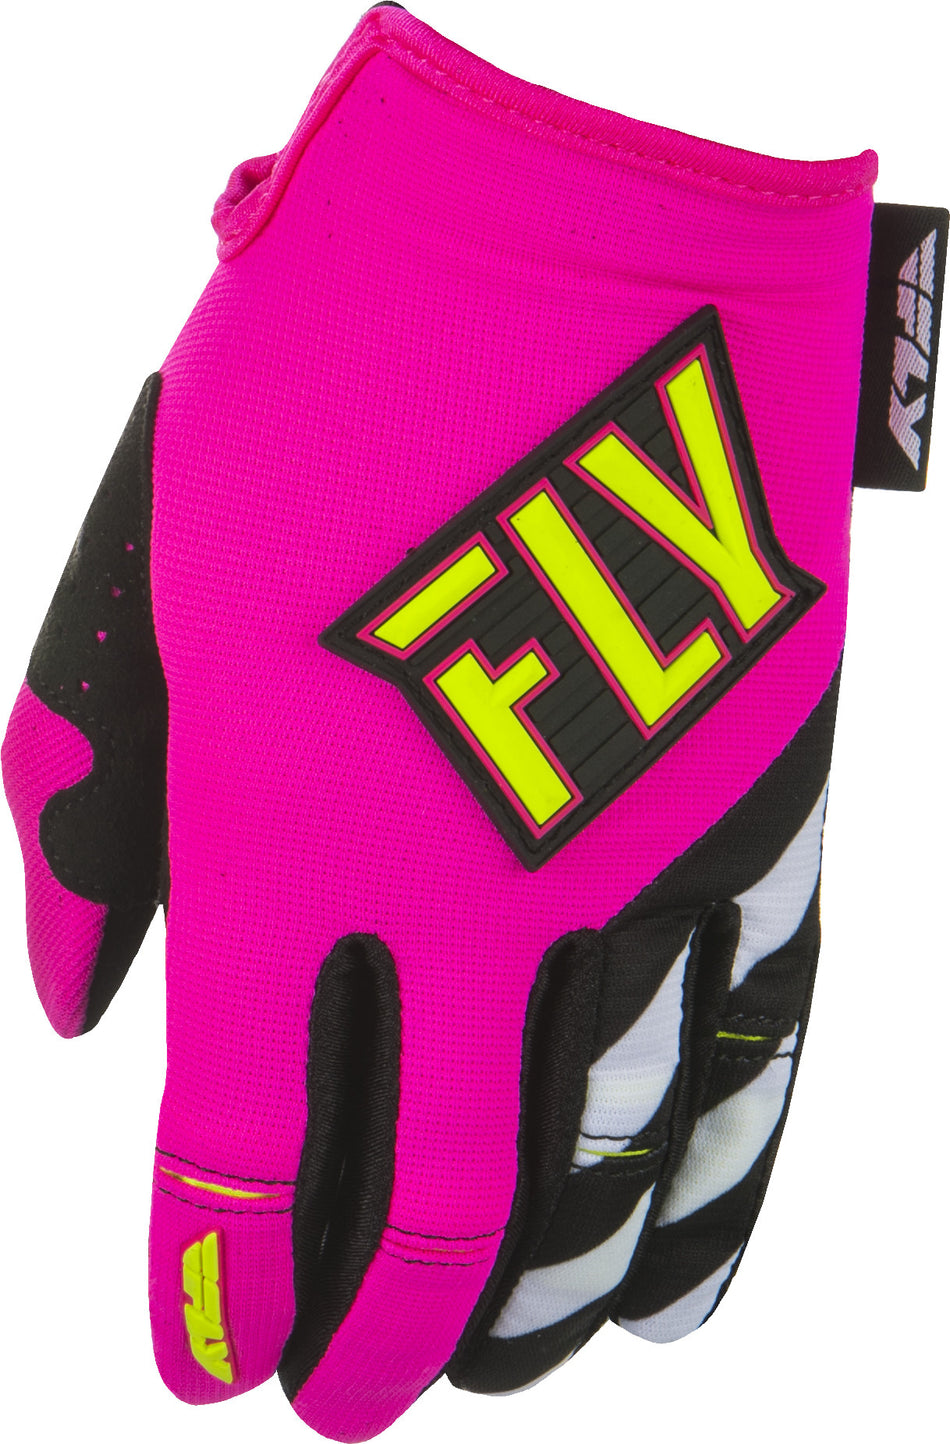 FLY RACING Kinetic Women's Gloves Neon Pink/Hi-Vis Yl 371-61904